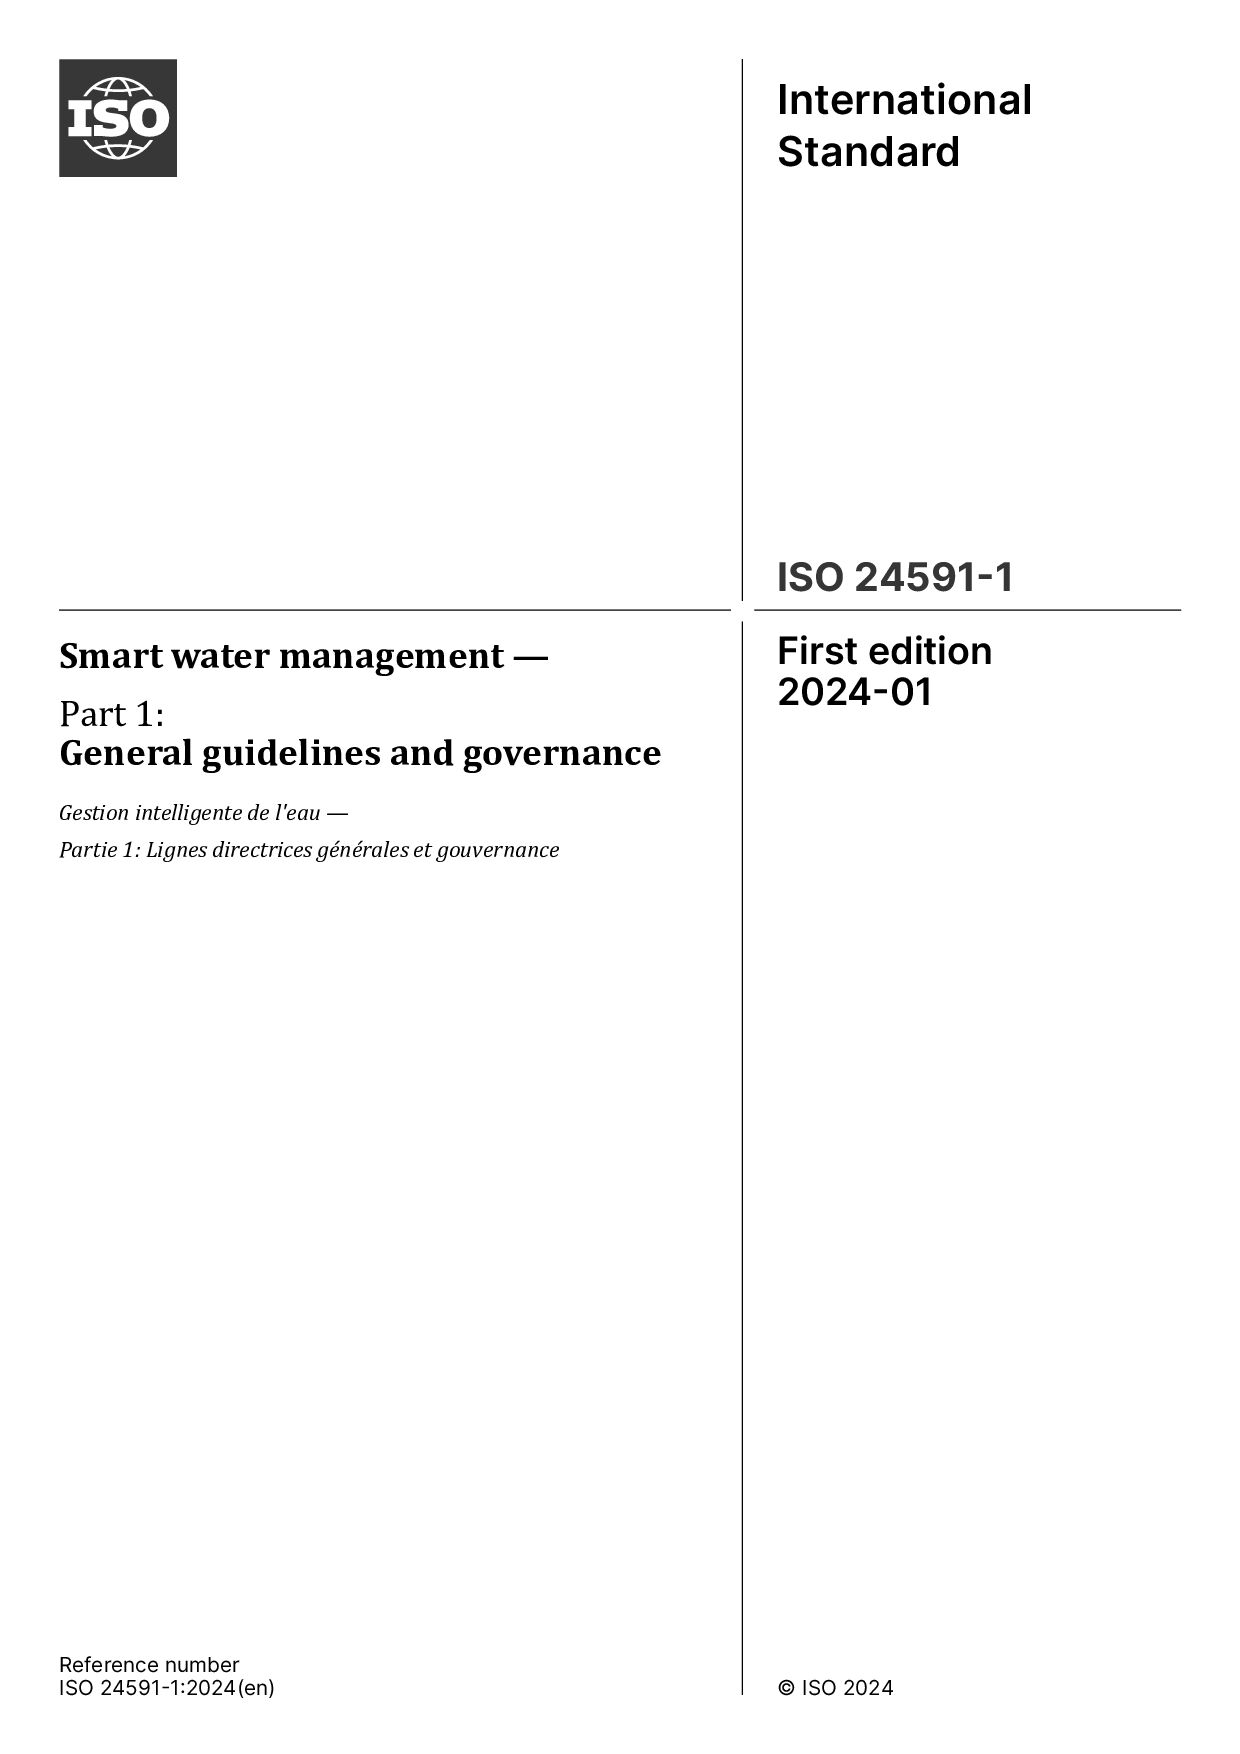 ISO 24591-1:2024封面图